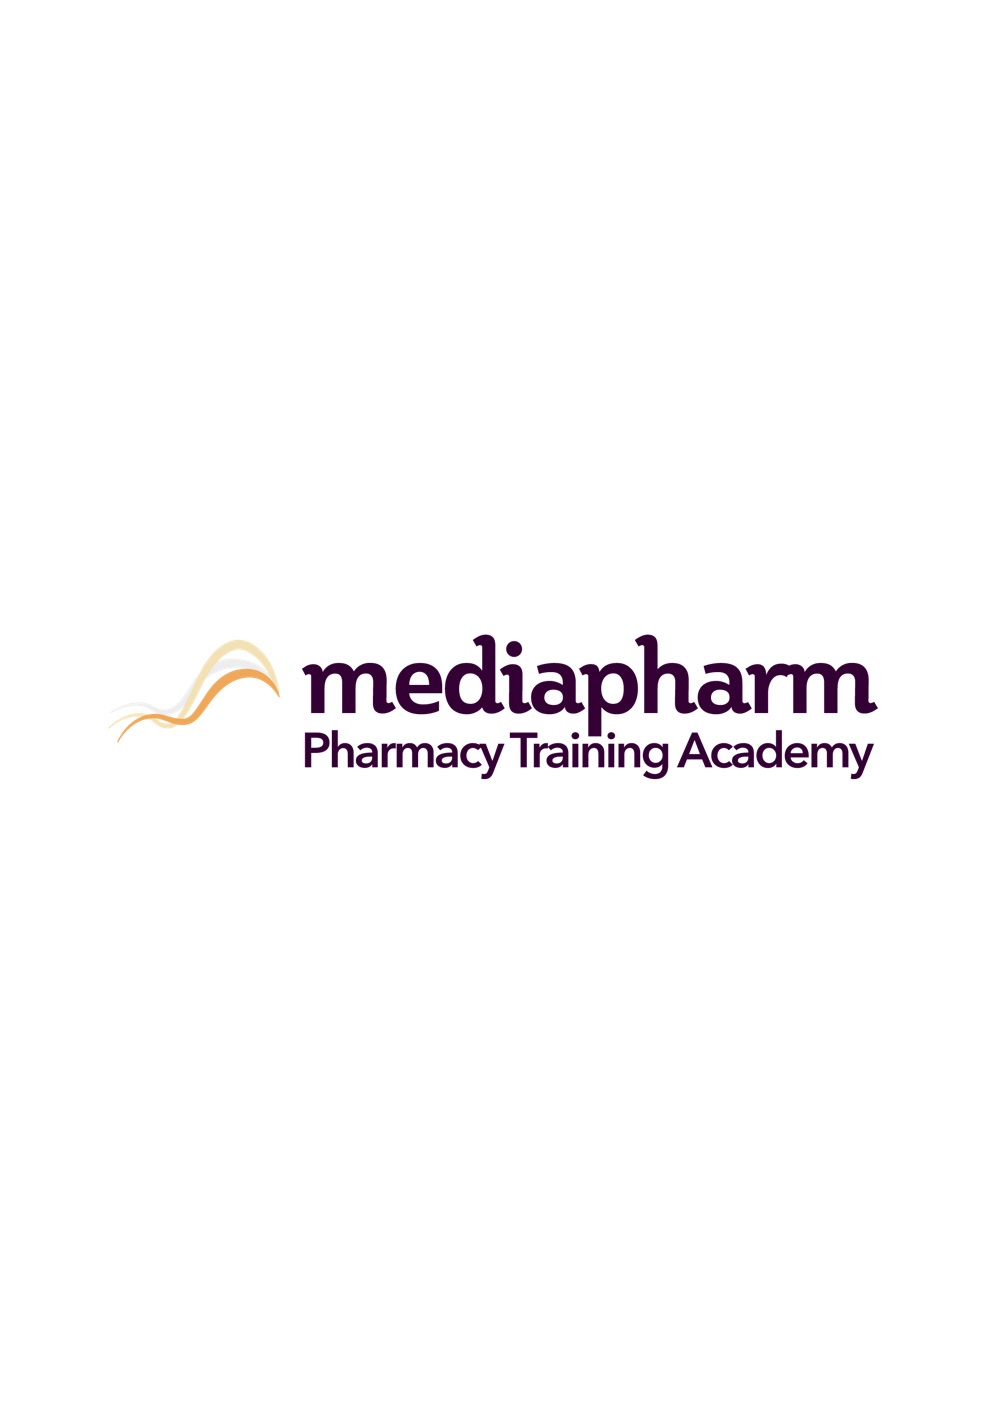 Mediapharm - Pharmadoctor partnership